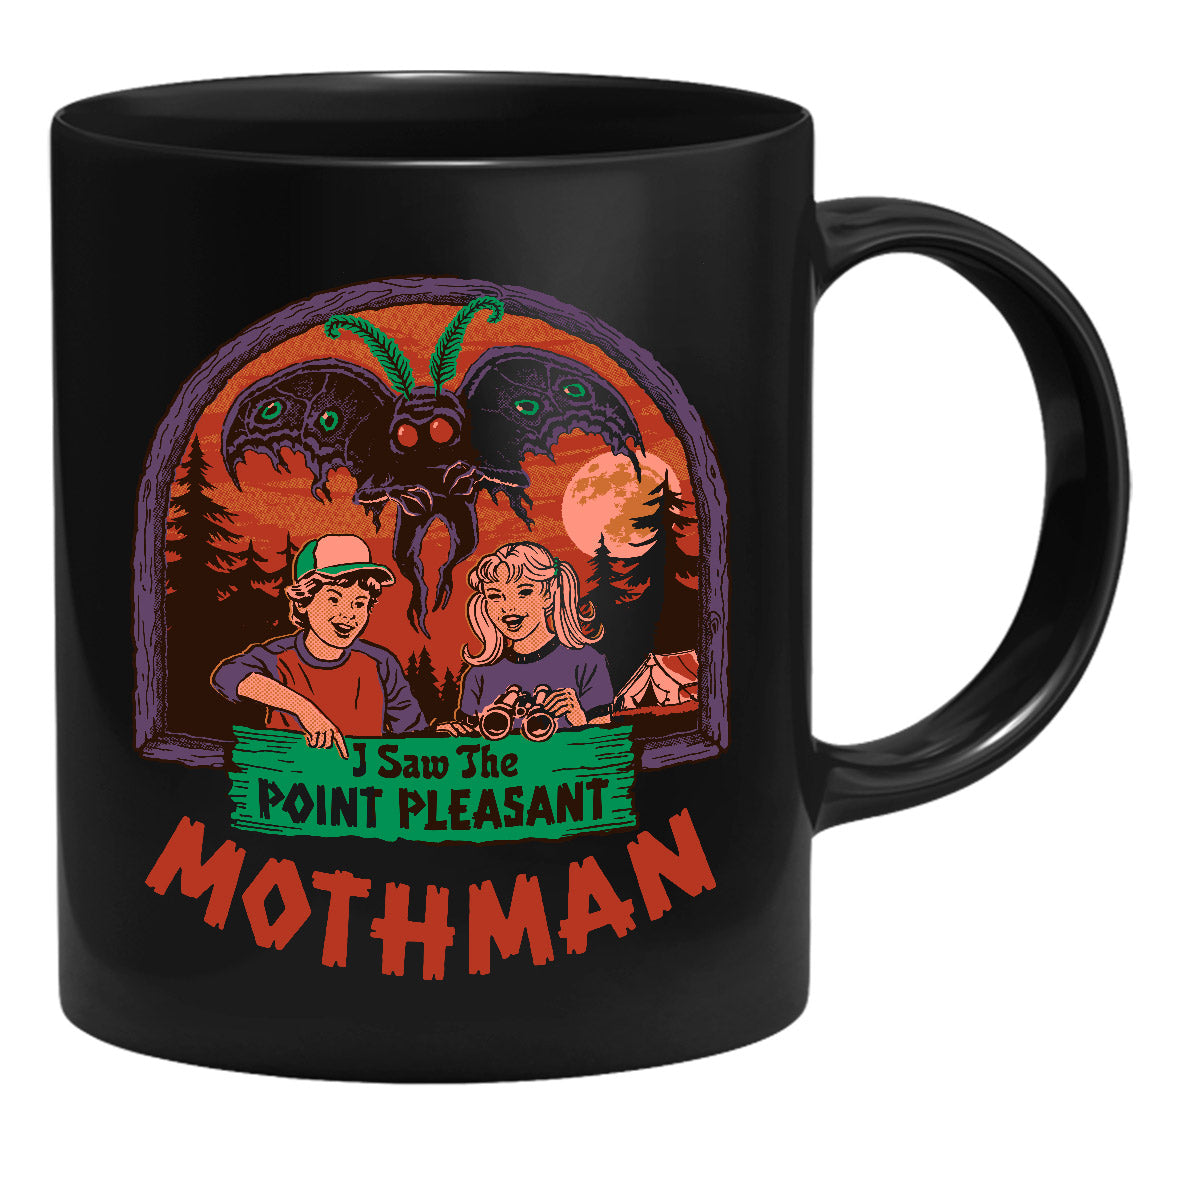 Steven Rhodes - I saw the Mothman - Mug